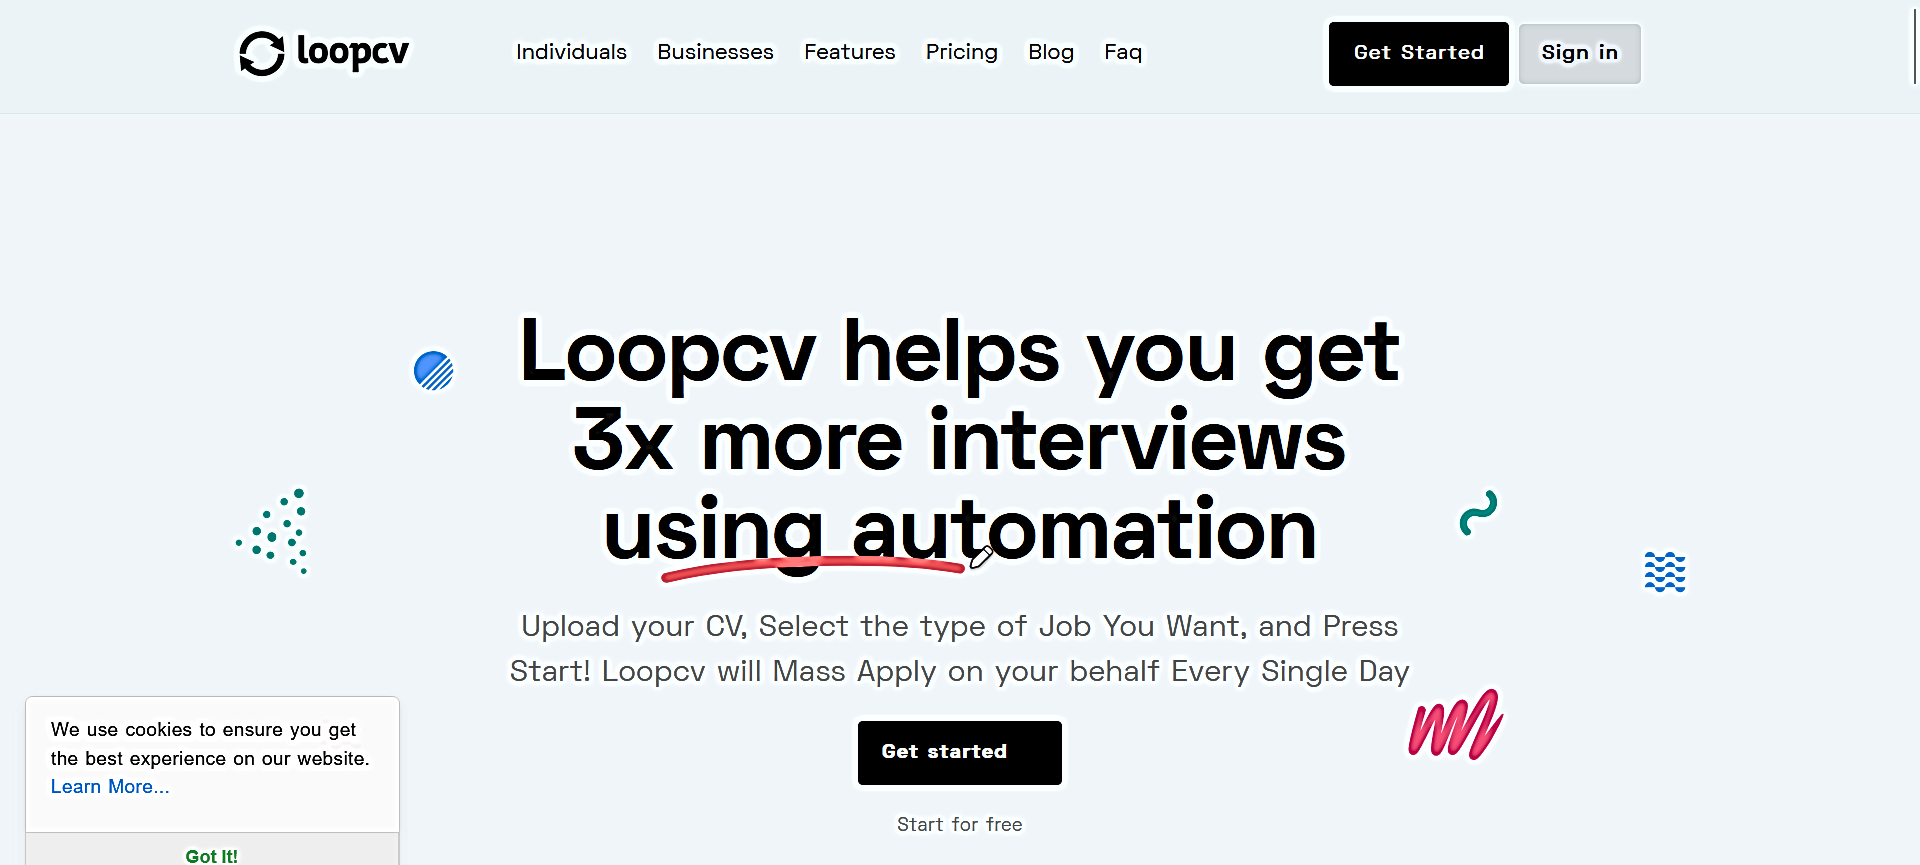 Loopcv featured